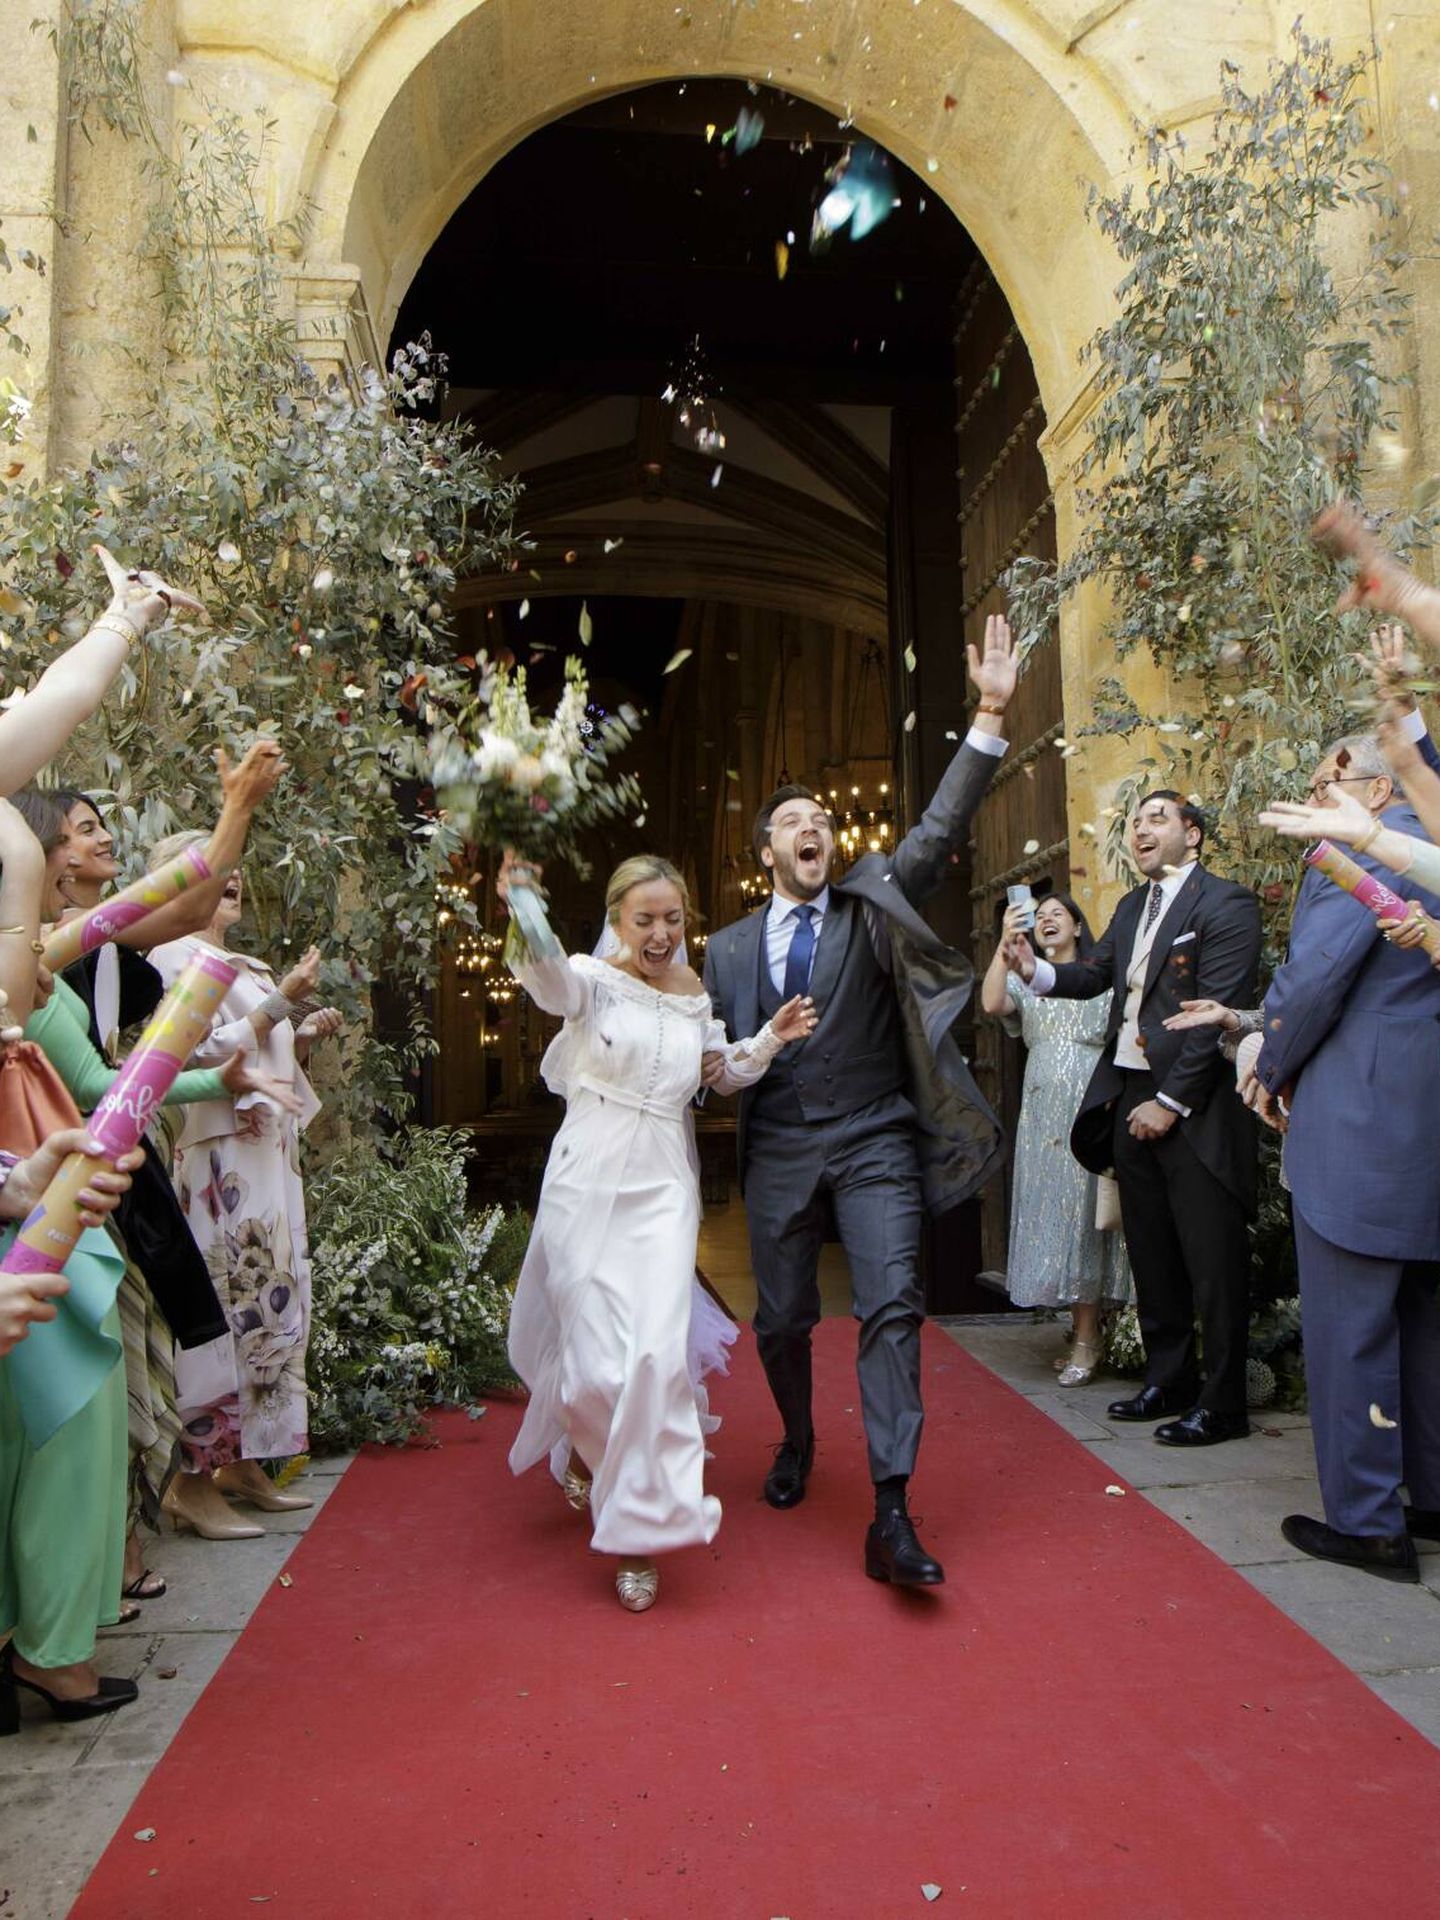 La boda de Cristina y su vestido de novia de Nicolás Montenegro. (Kiko Simeón)